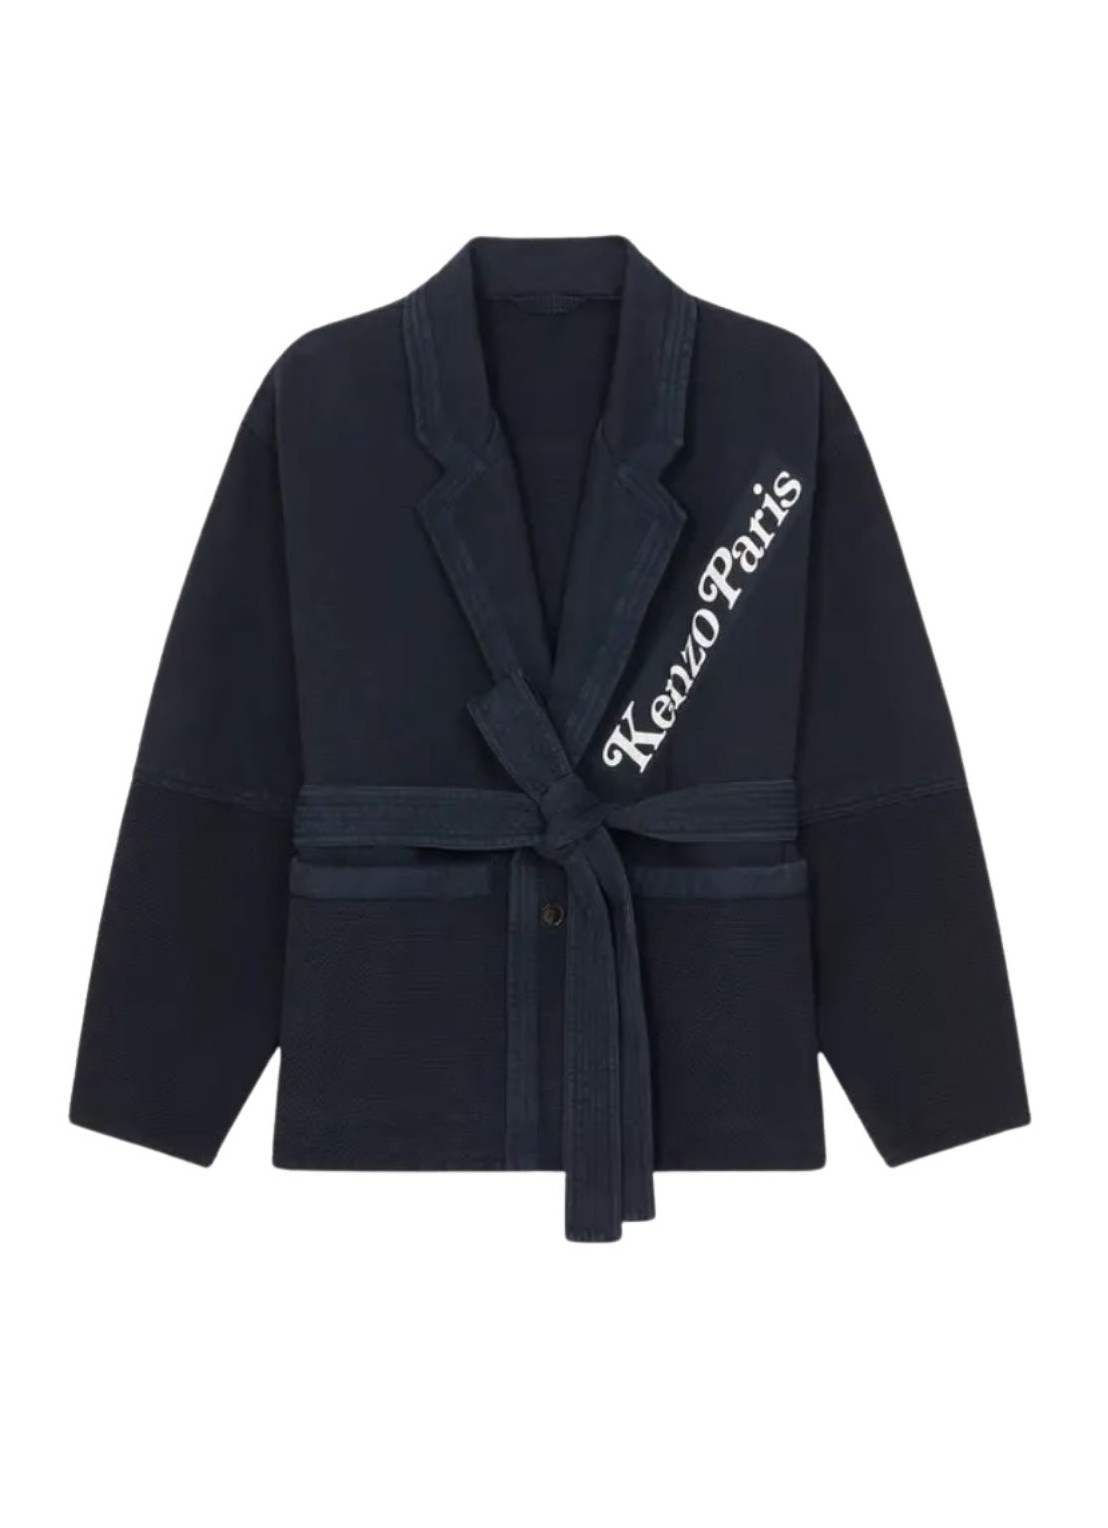 Outerwear kenzo outerwear man kenzo by verdy judo jacket fe55ve2279os 77 talla M
 